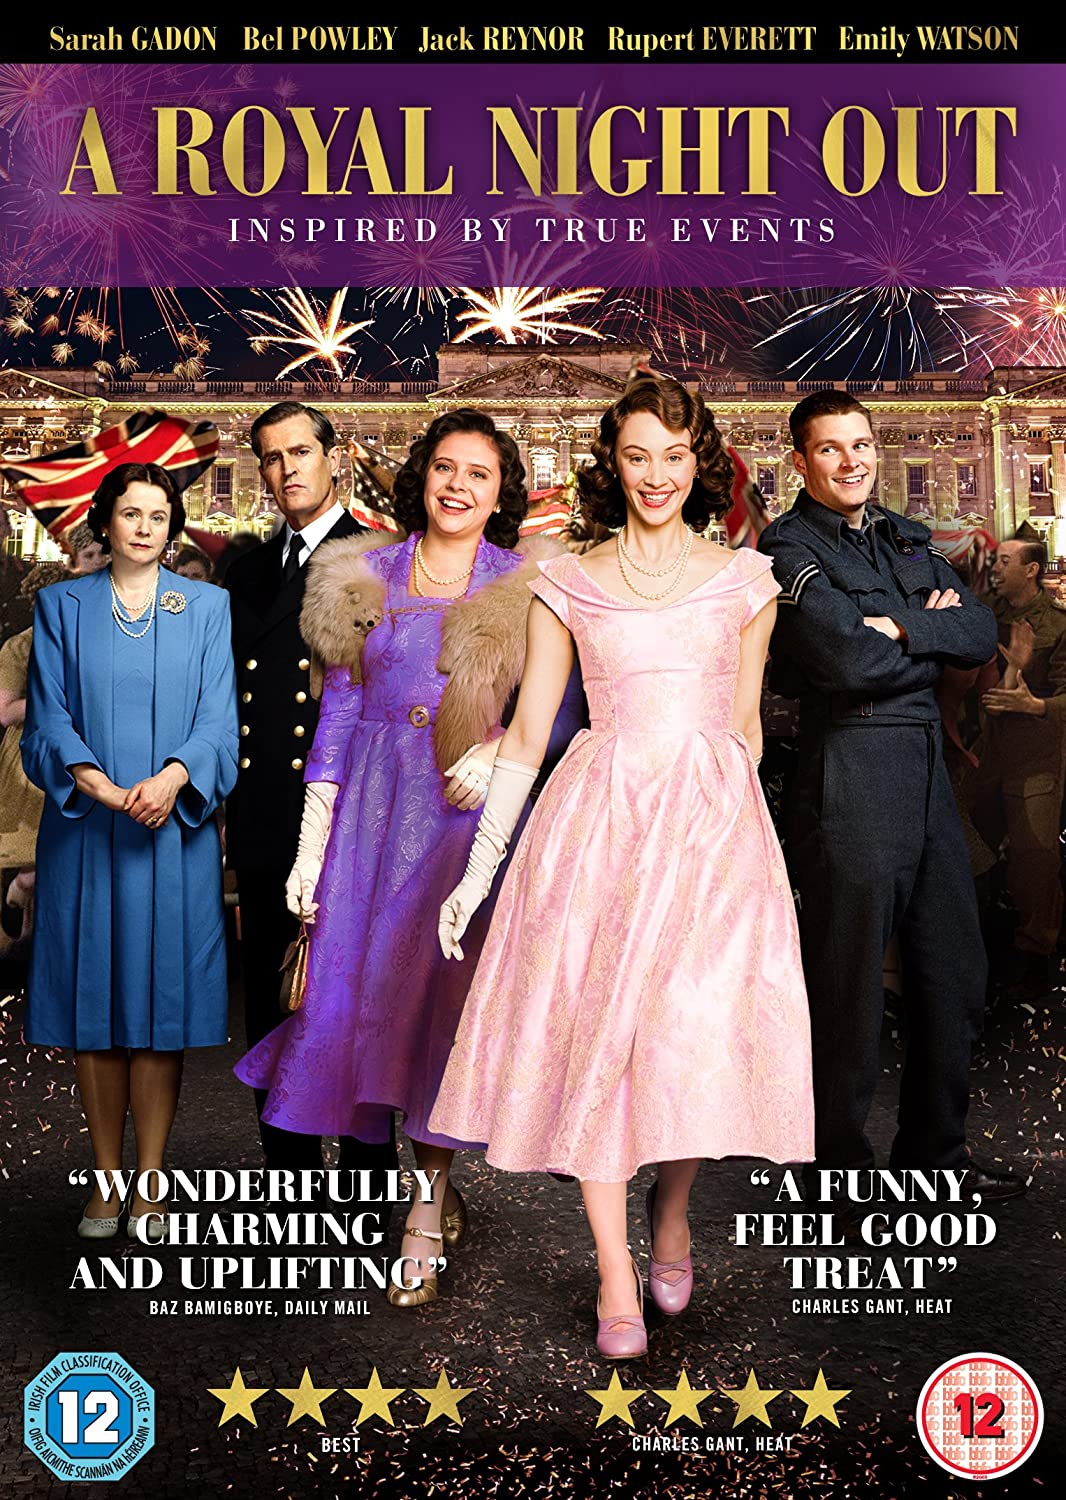 A Royal Night Out [2015] – Liebesfilm/Drama [DVD]